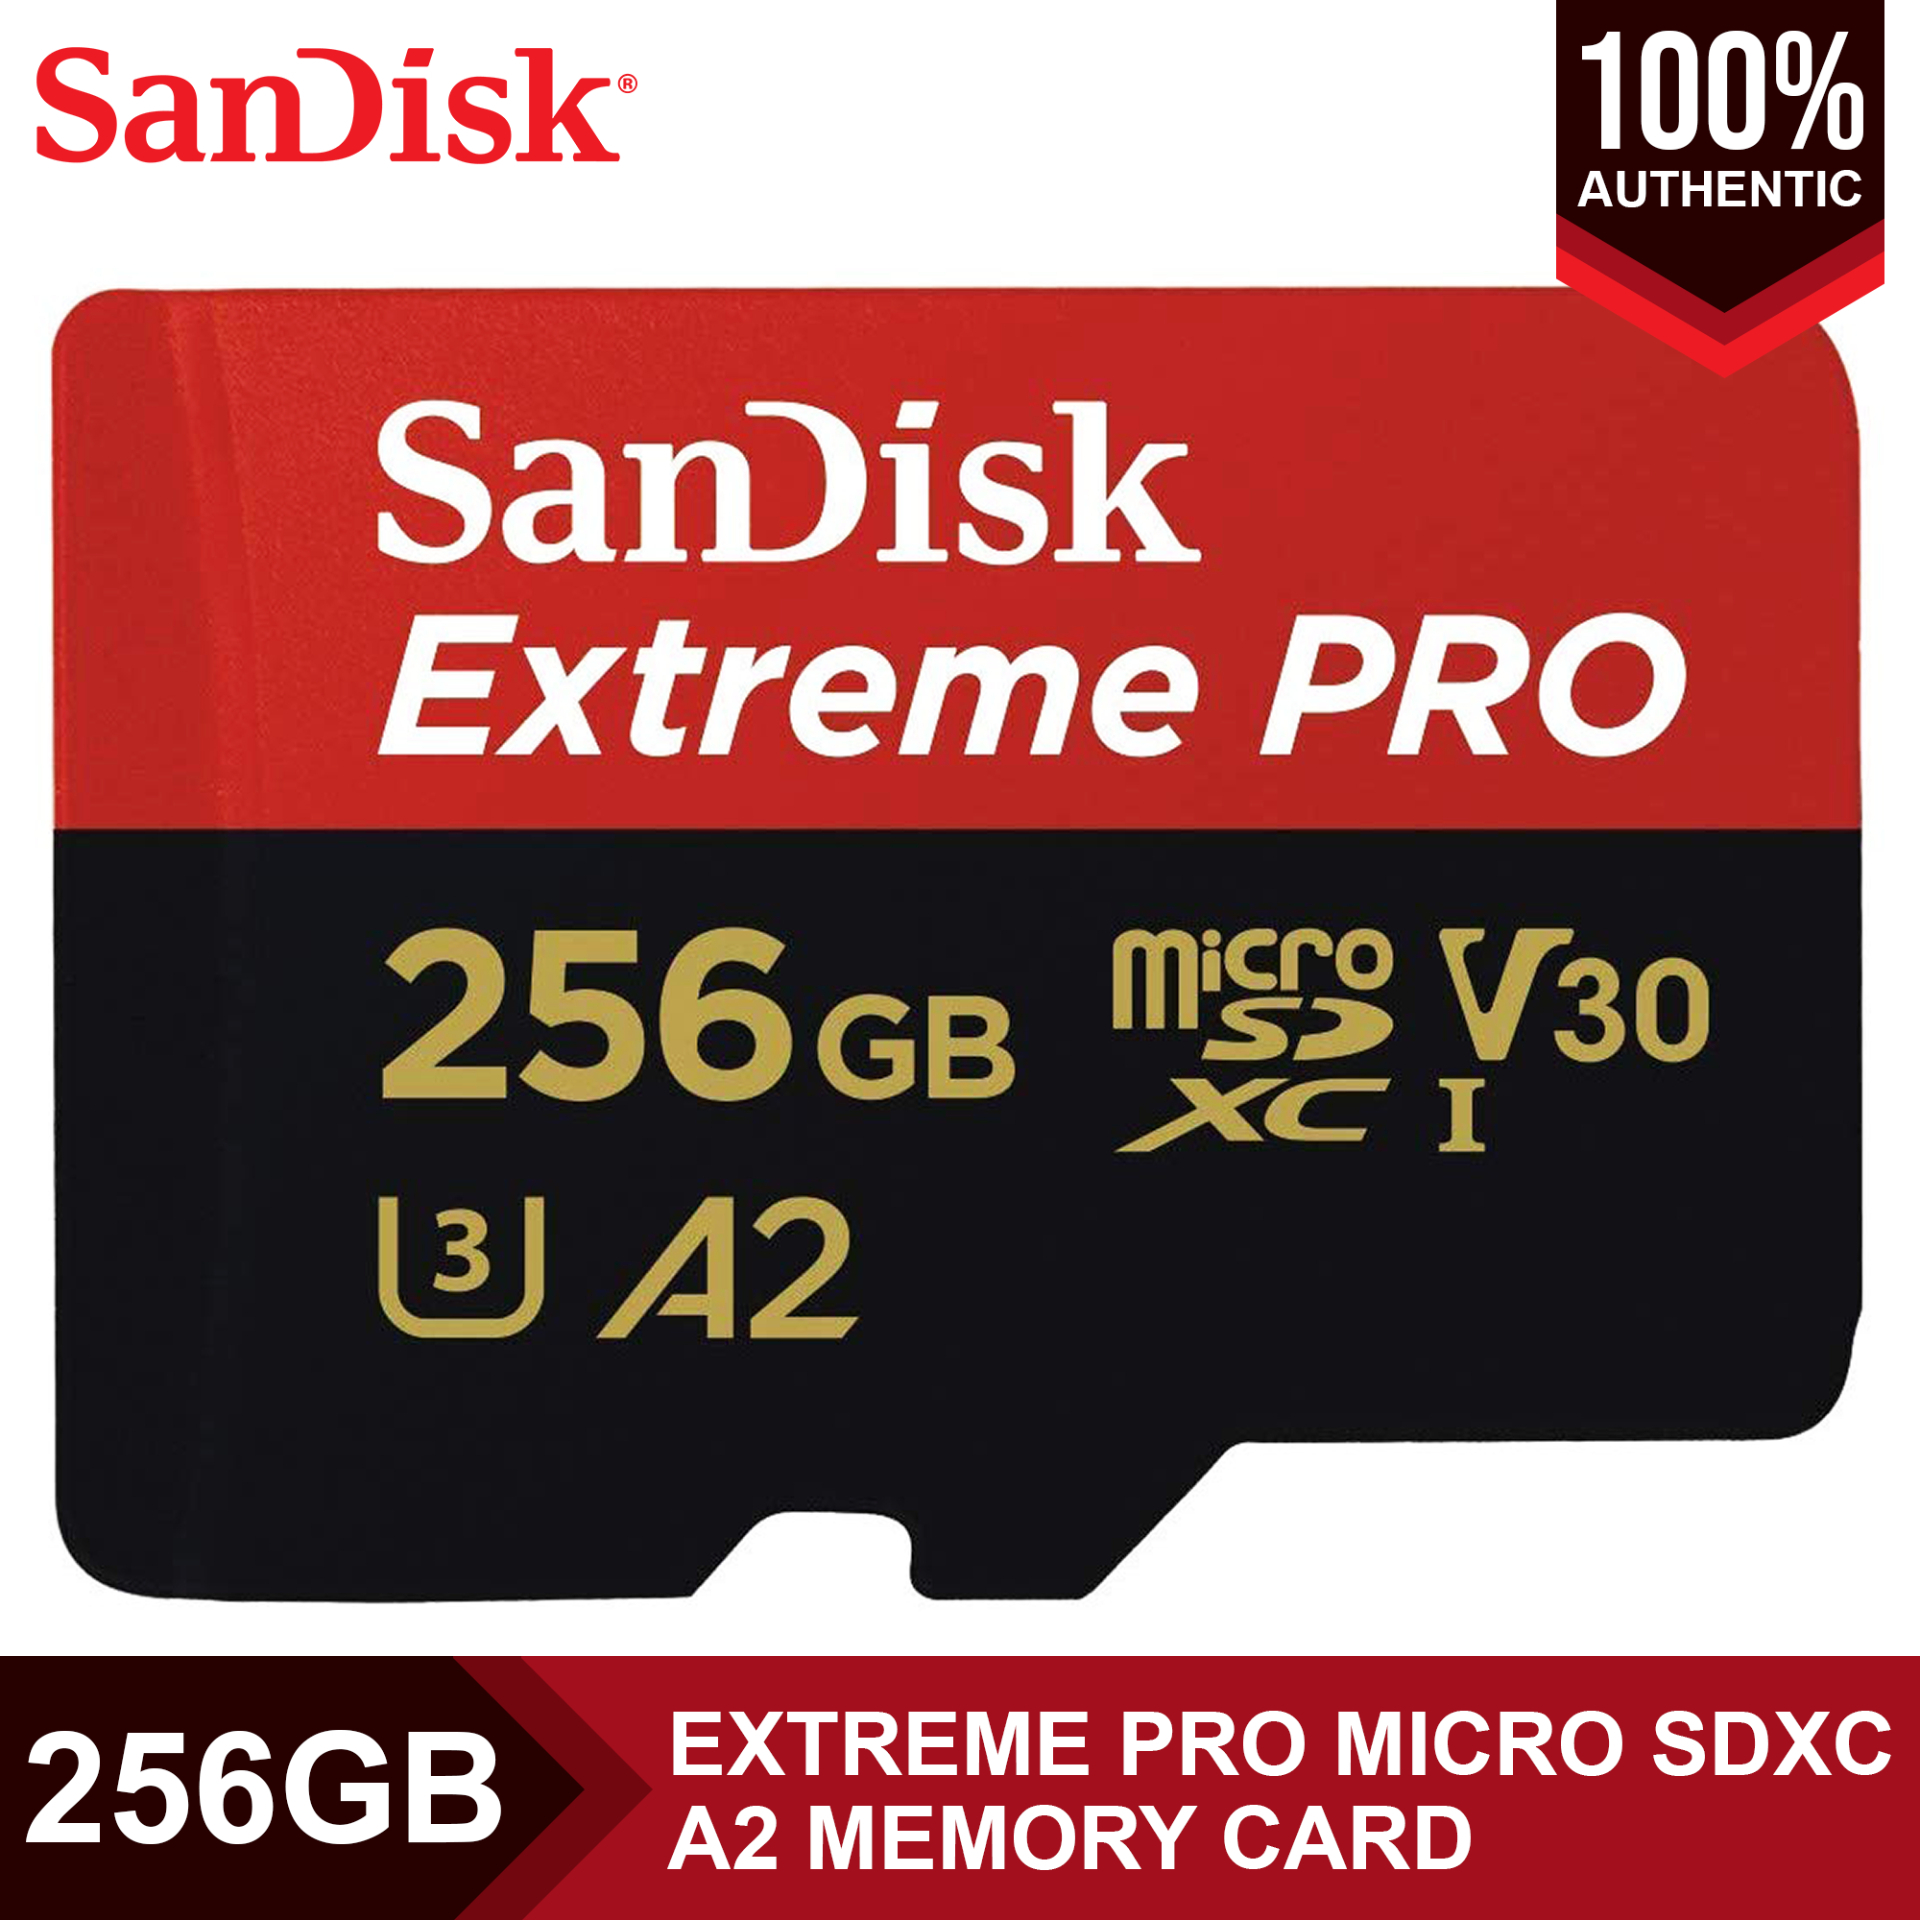 SANDISK EXTREME PRO 256GB MICROSDXC UHS-I CARD 140MB/S 4K